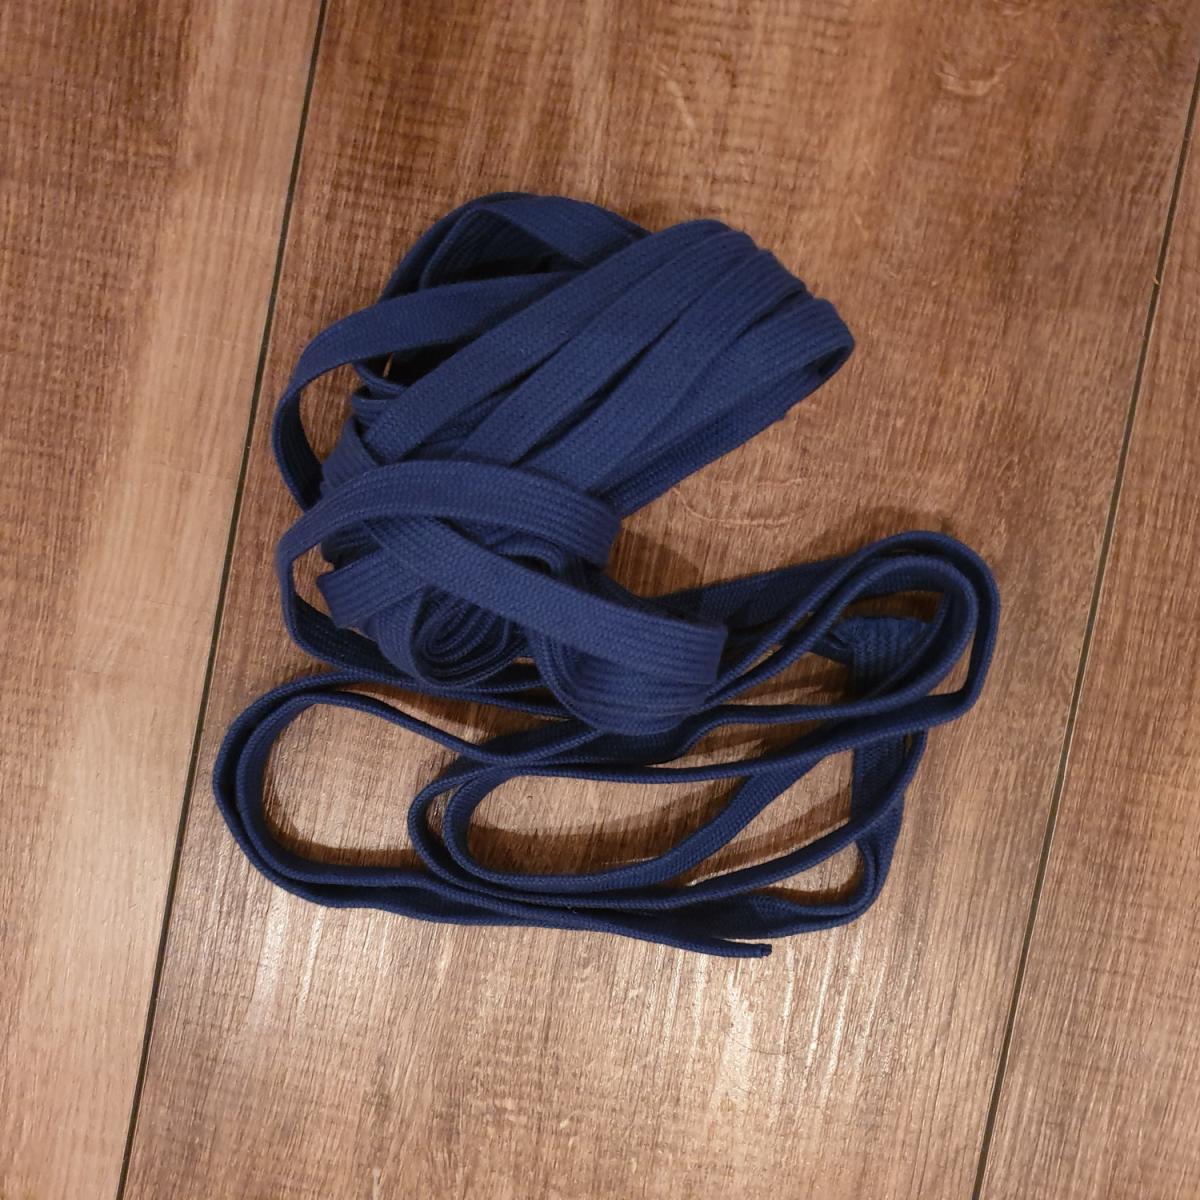 Sageo made of cotton in the color egg blue ♥ Sageo 180 cm, Sageo 200 cm✅ for your martial arts ✓ Aikido, Iaido, Kendo, Koryu, Jodo✅ Top price & high quality ✓ 100% cheap✔Order online now➤ www.bokken-welt. de